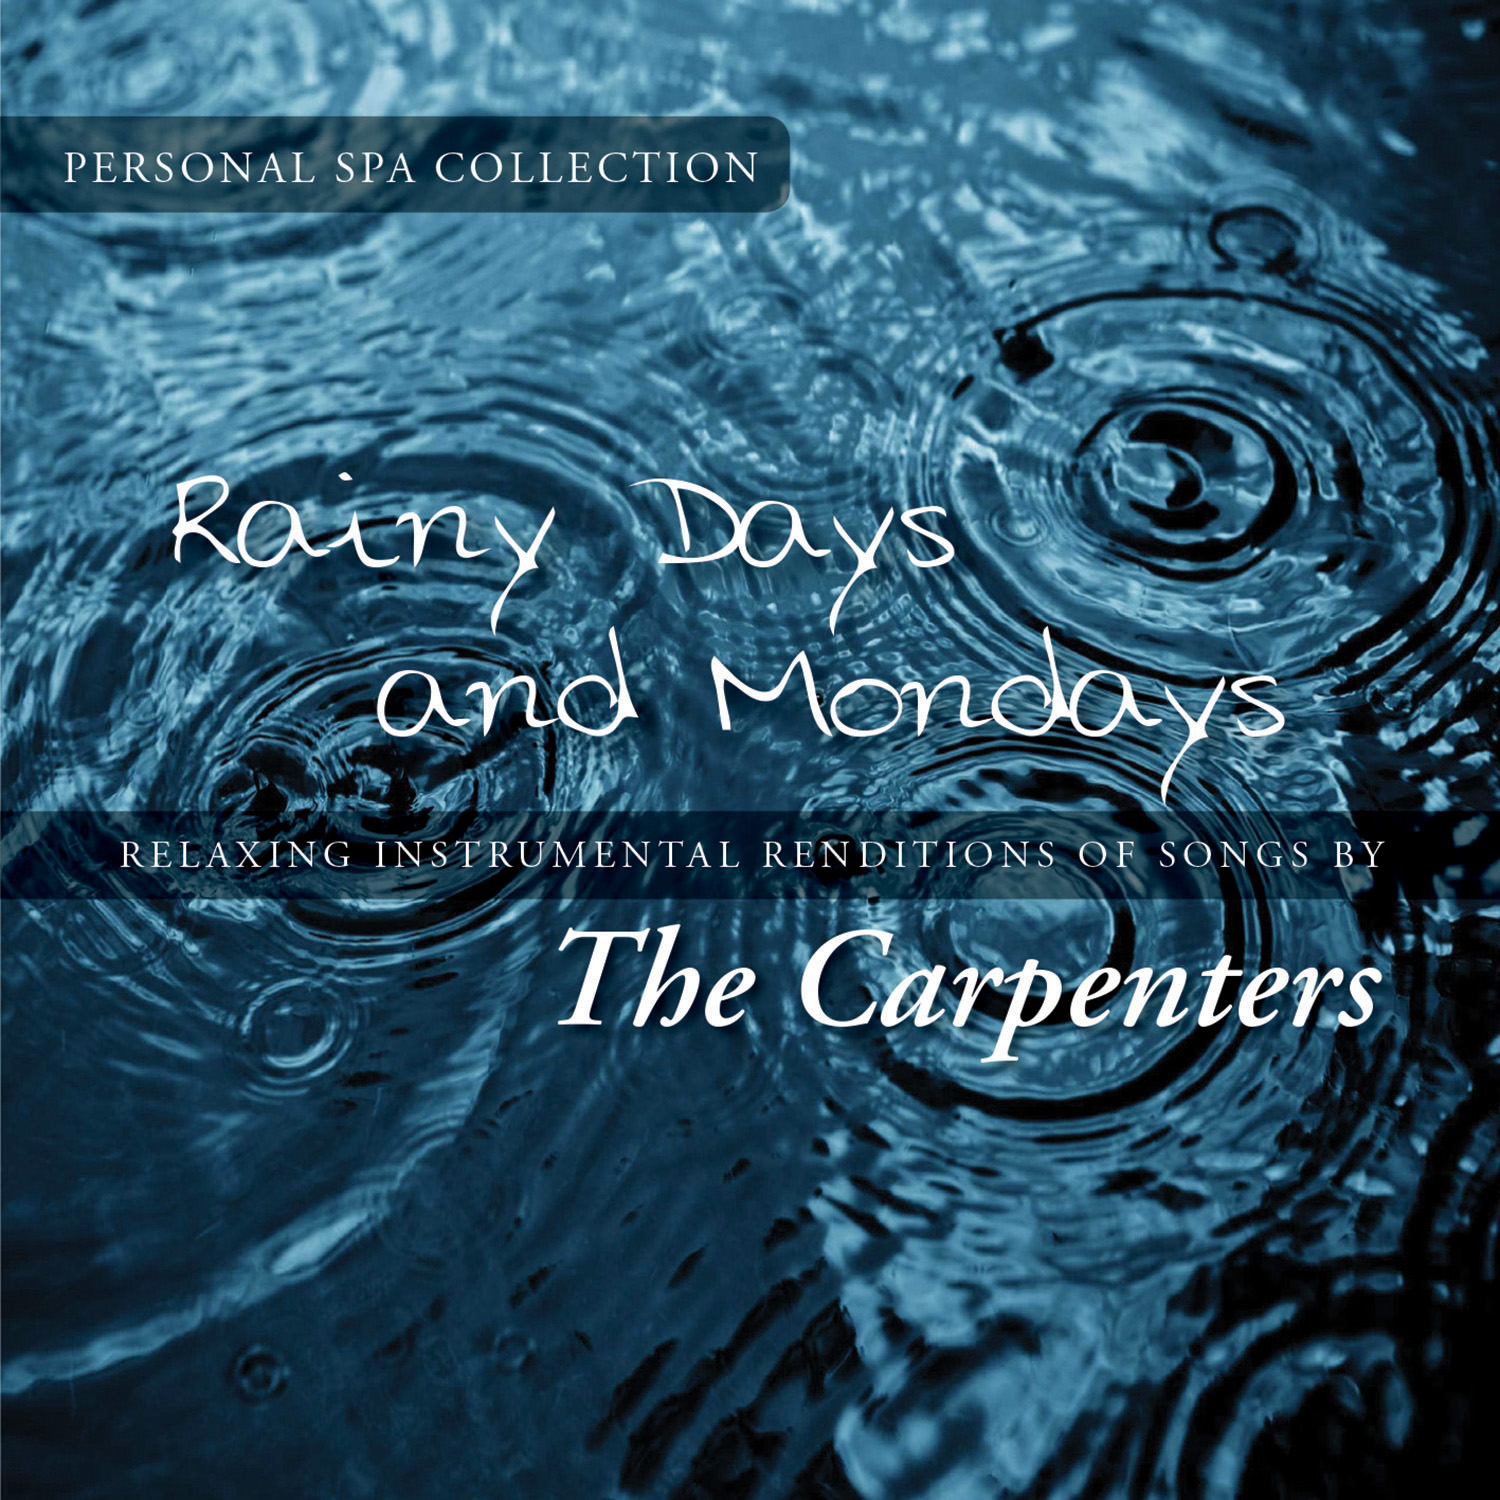 Rainy Days and Mondays - Visions & Verses